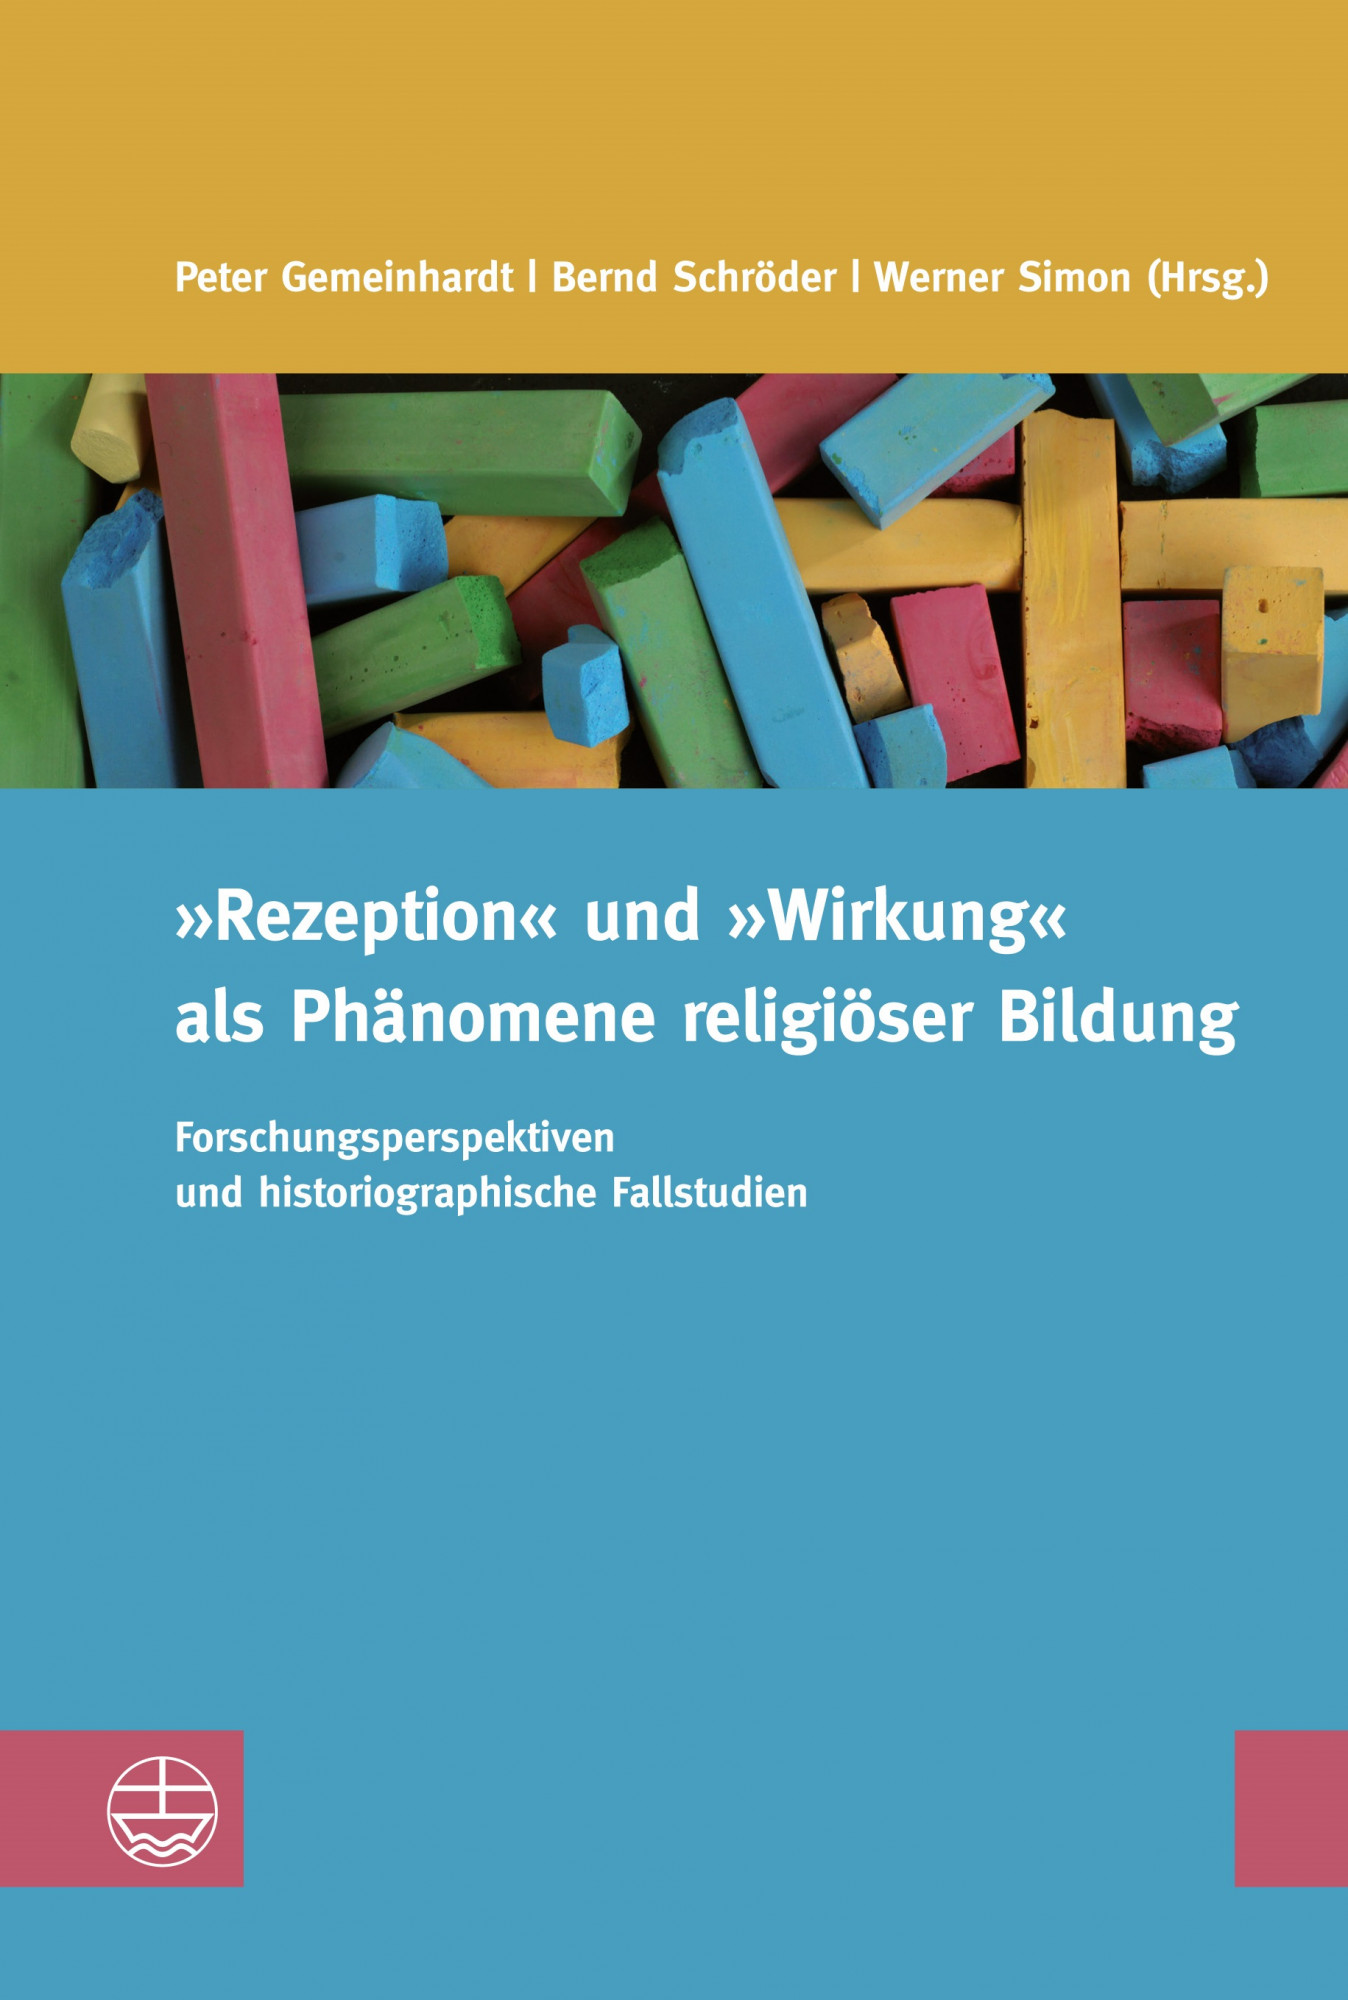 Peter Gemeinhardt, Bernd Schröder, Werner Simon (Hrsg.)